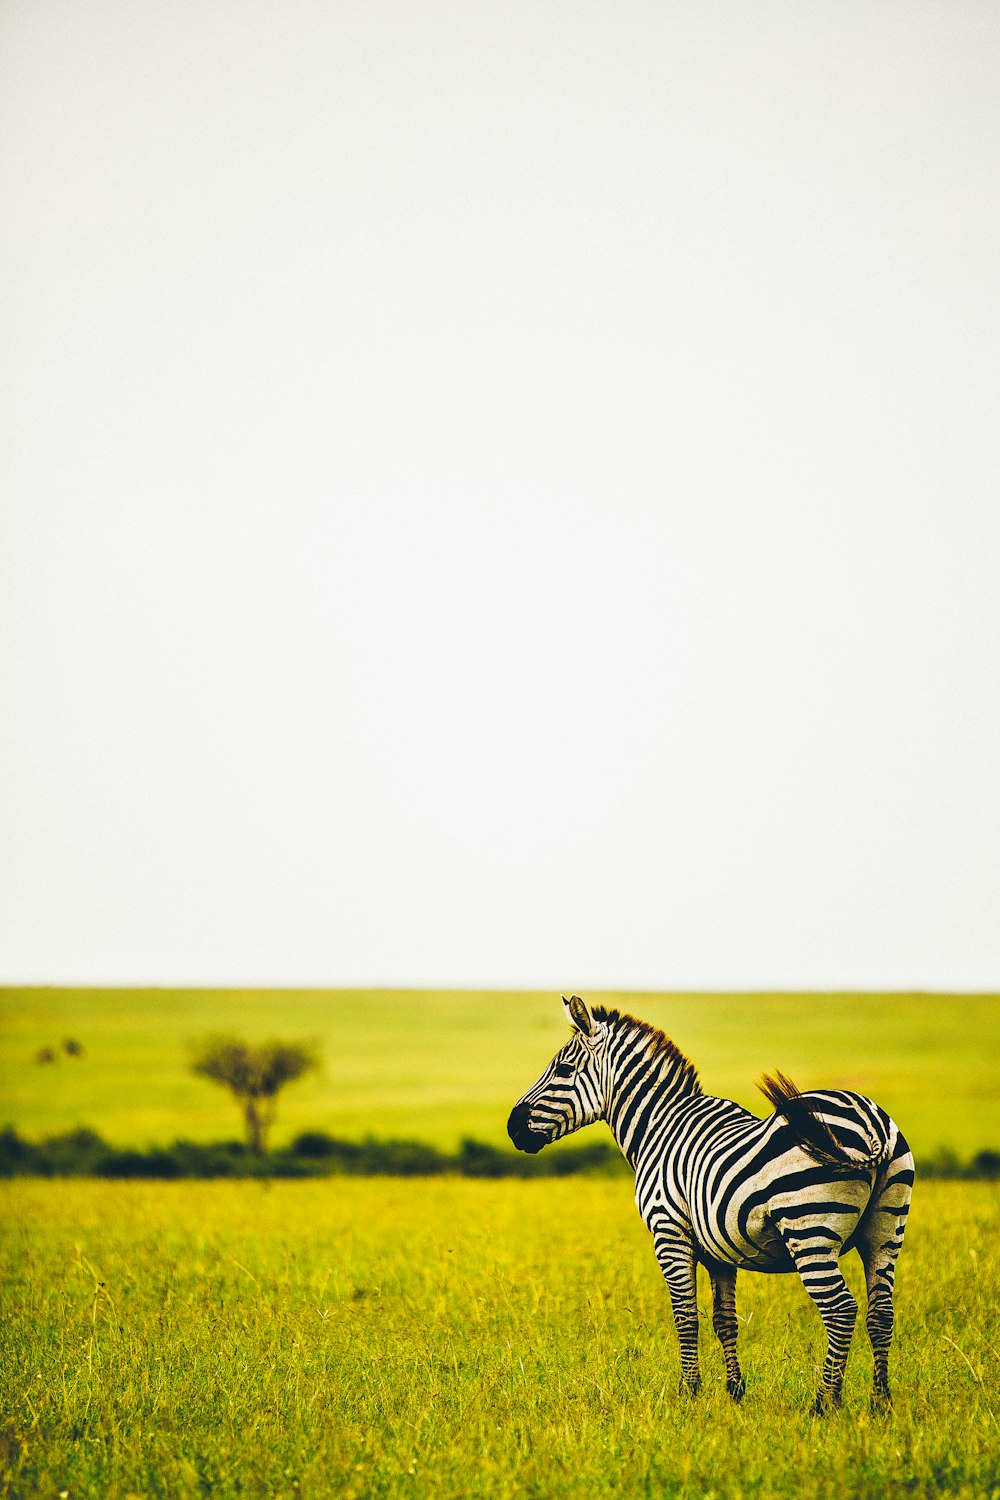 zebra on grass field